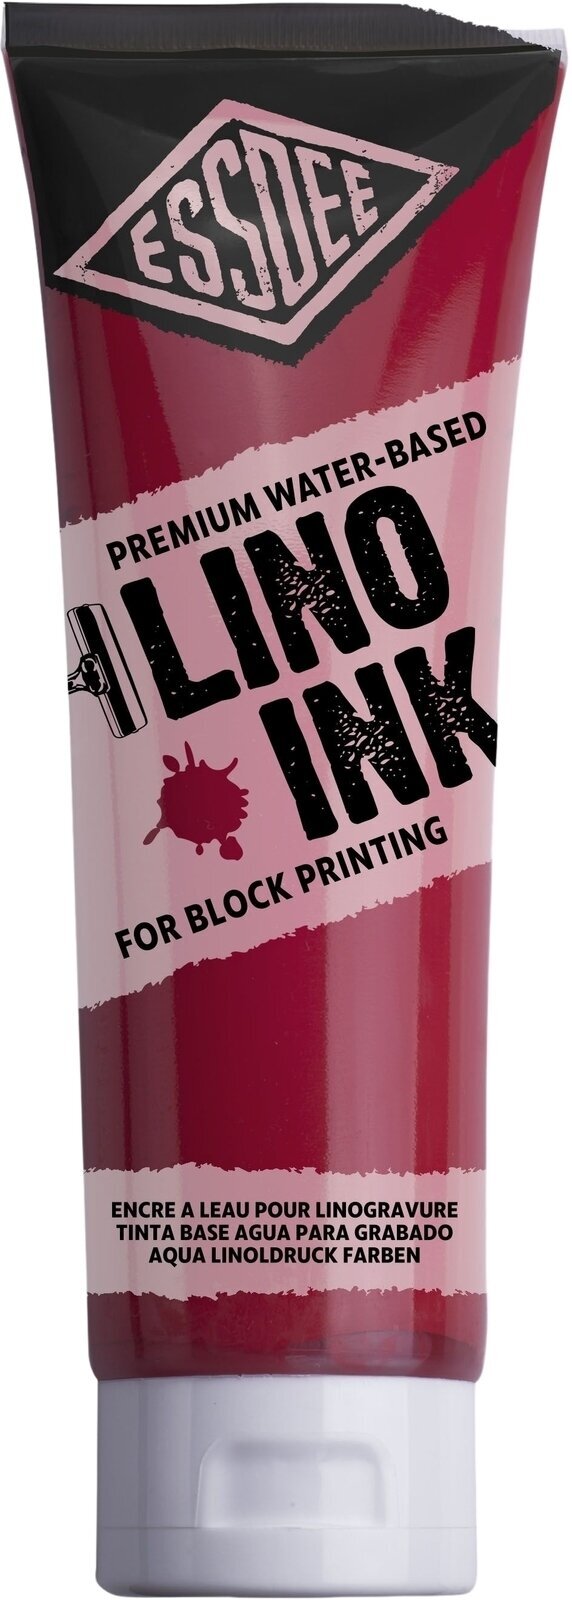 Paint For Linocut Essdee Block Printing Ink Paint For Linocut Brilliant Red (Scarlet) 300 ml